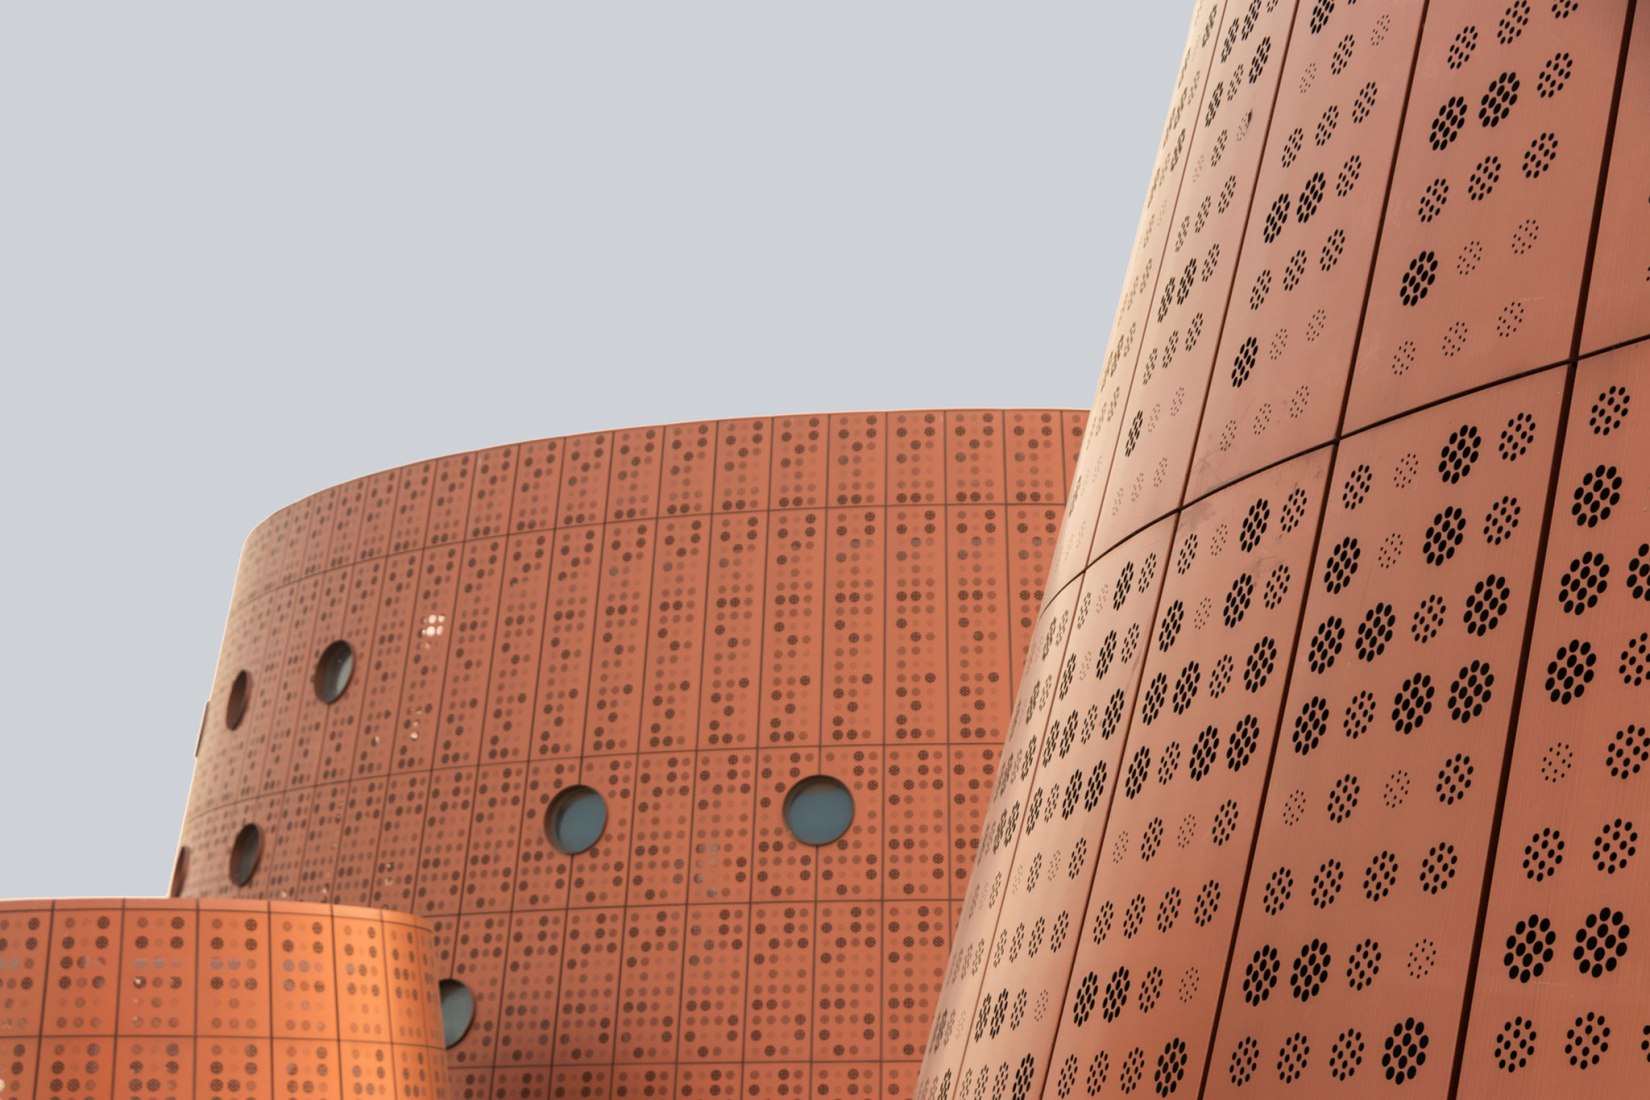 Tianjin Binhai Exploratorium por Bernard Tschumi Architects. Fotografía por Kris Provoost